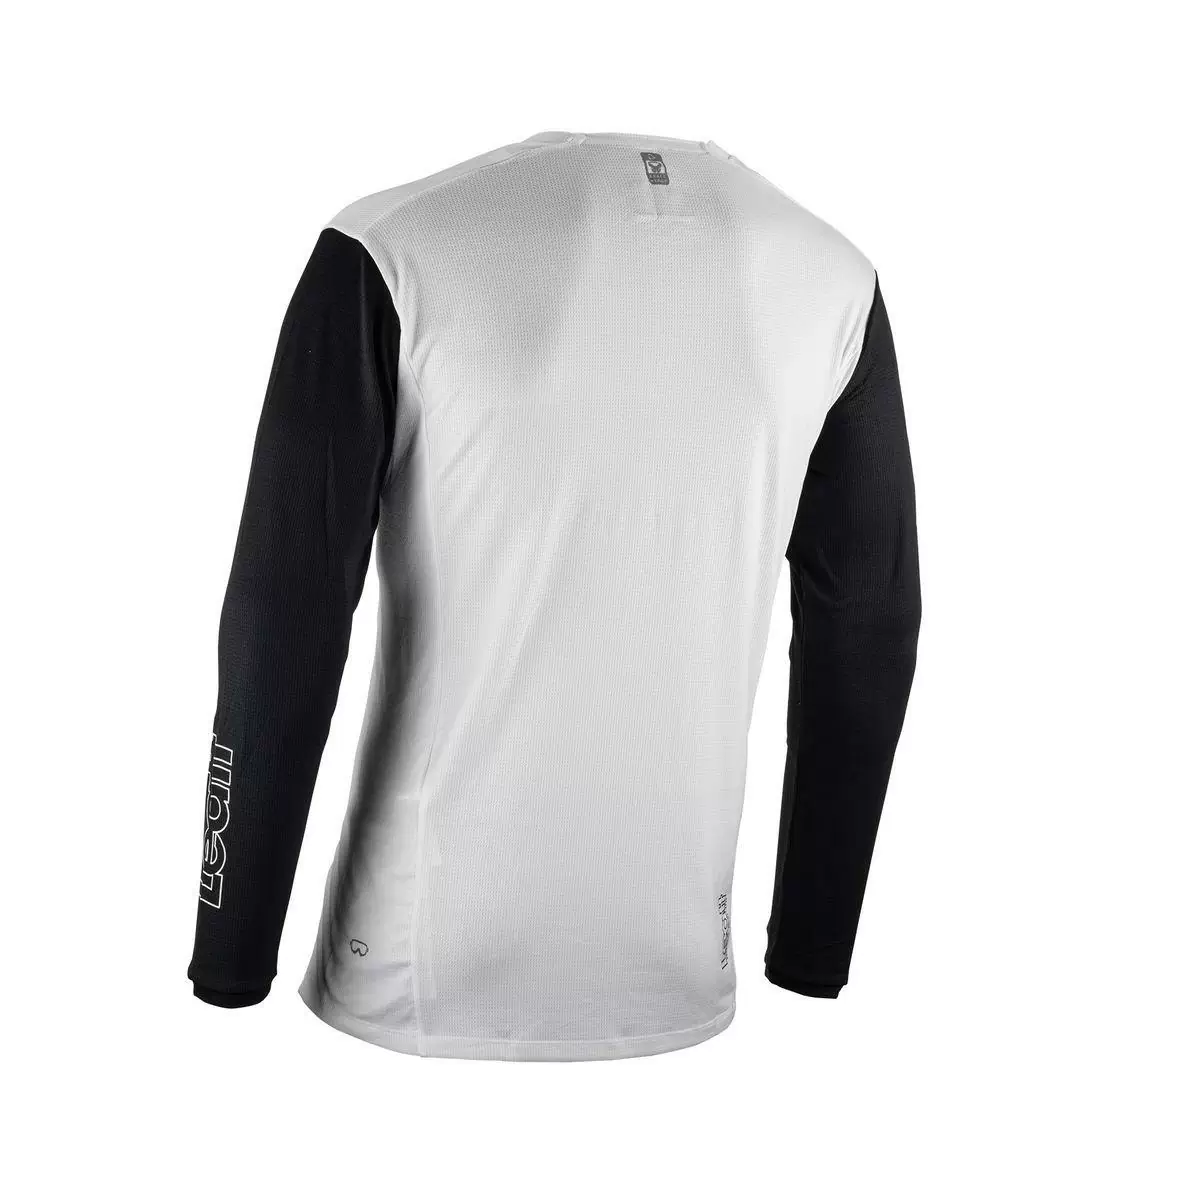 Camisola MTB mangas compridas 4.0 Enduro branco/preto tamanho GG #3